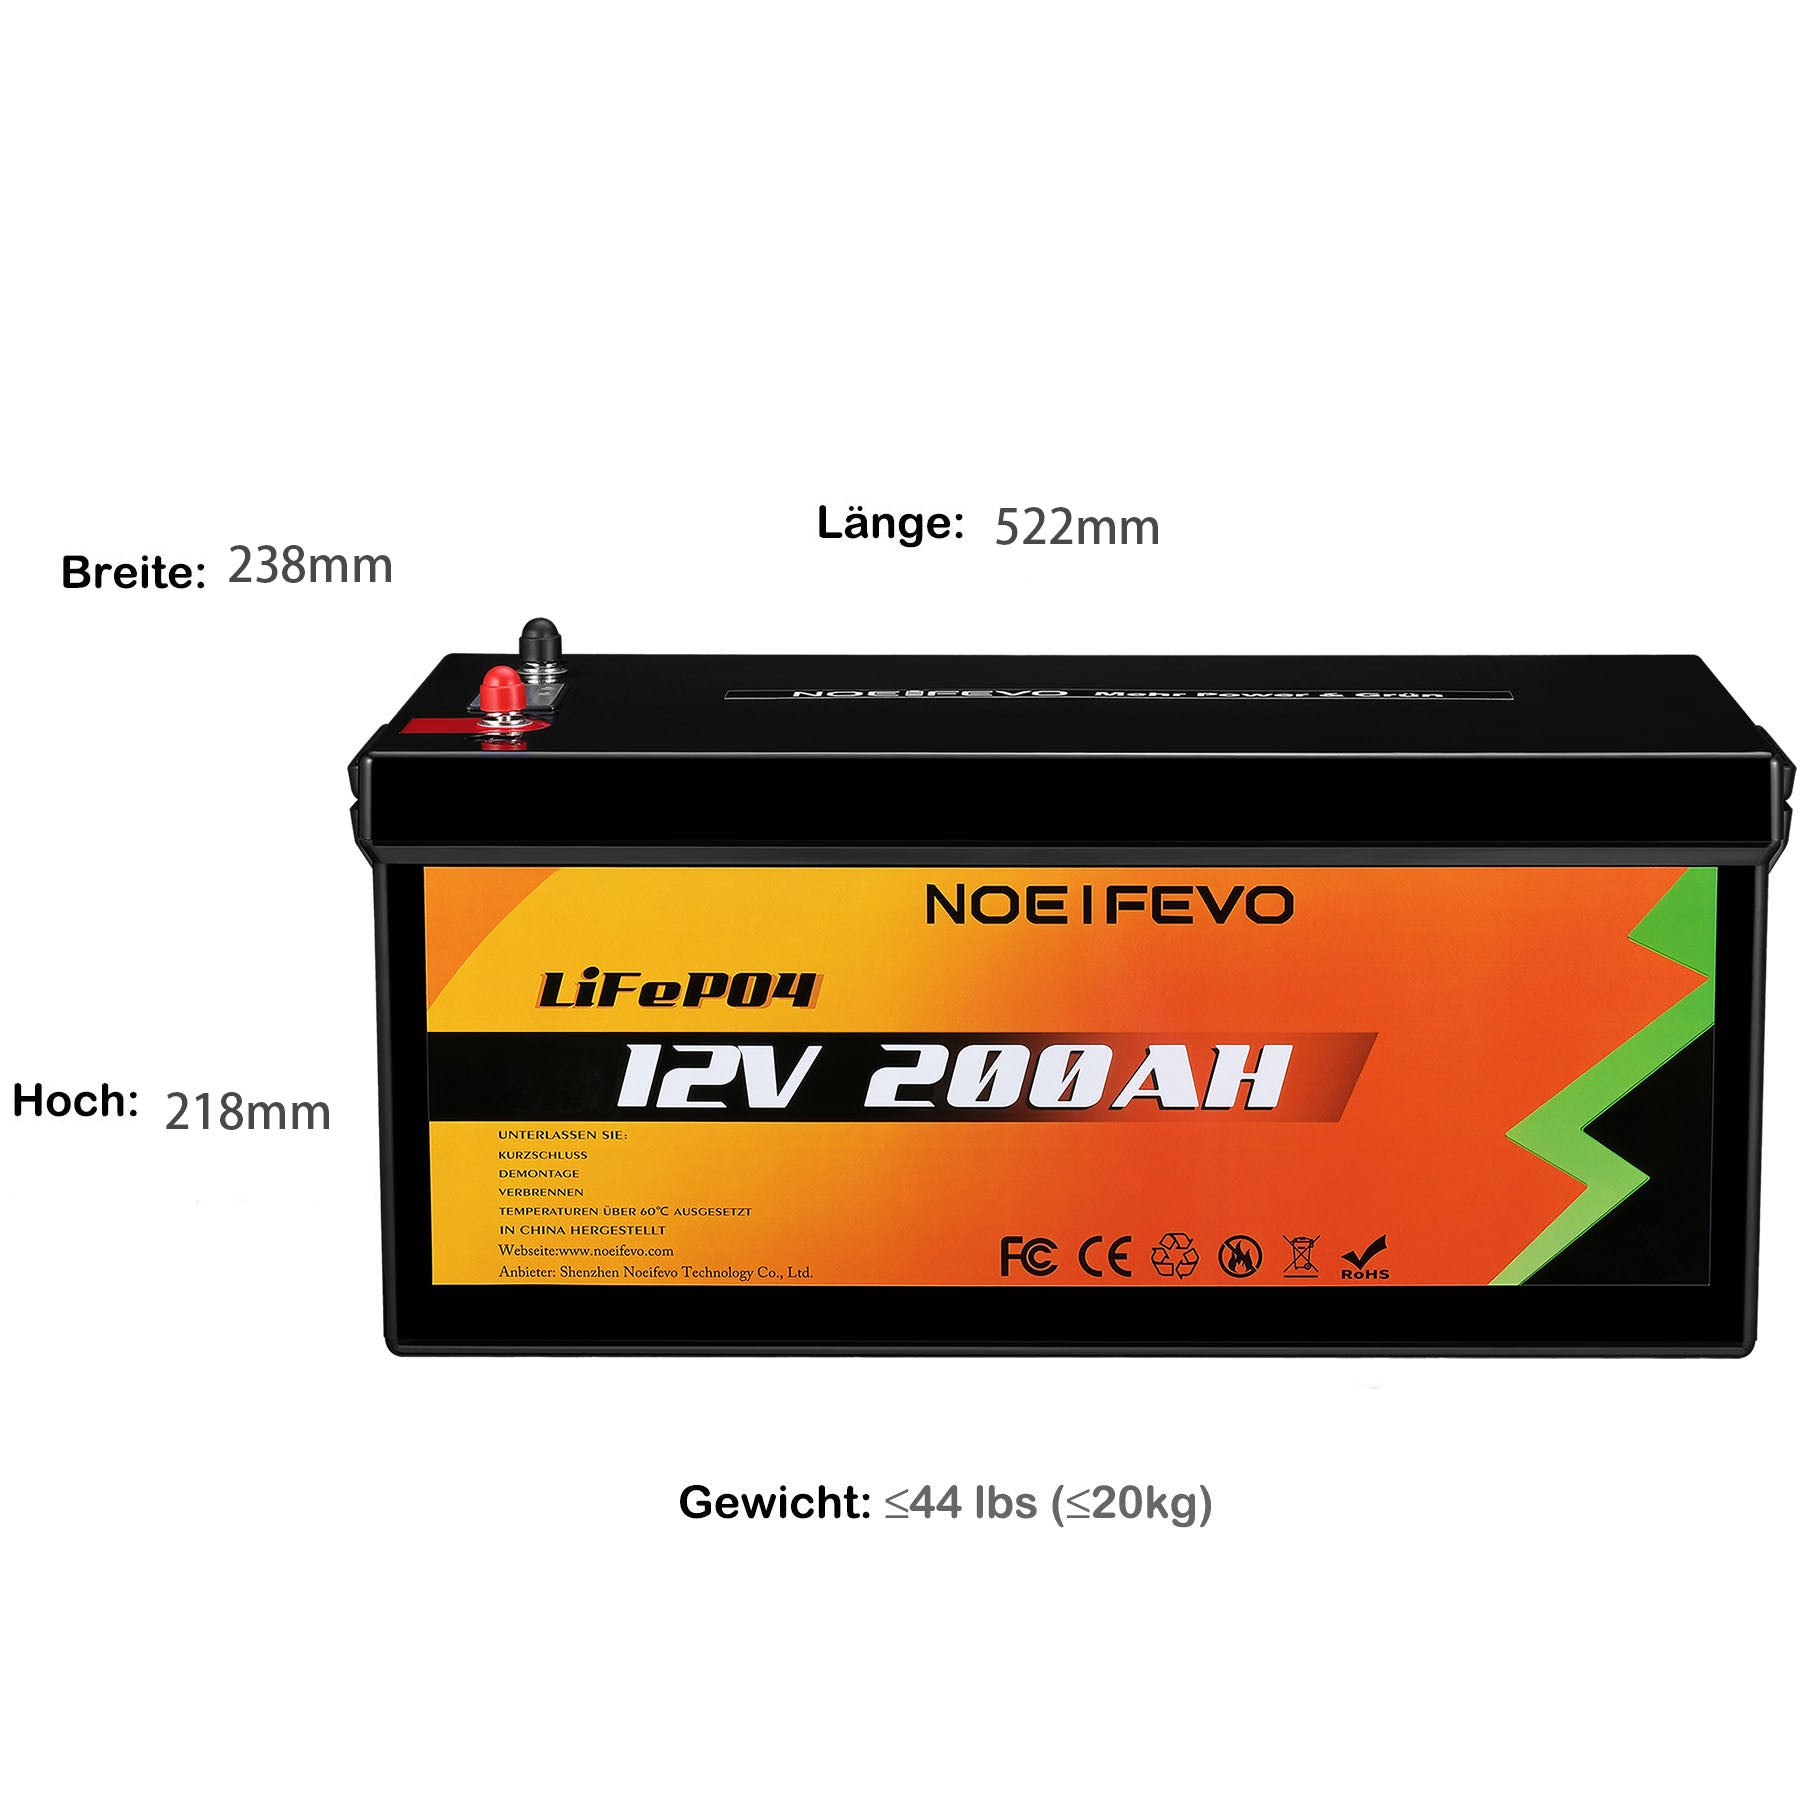 Lithium Ion battery 12V 100Ah - PowerBrick - High quality LiFePO4 battery